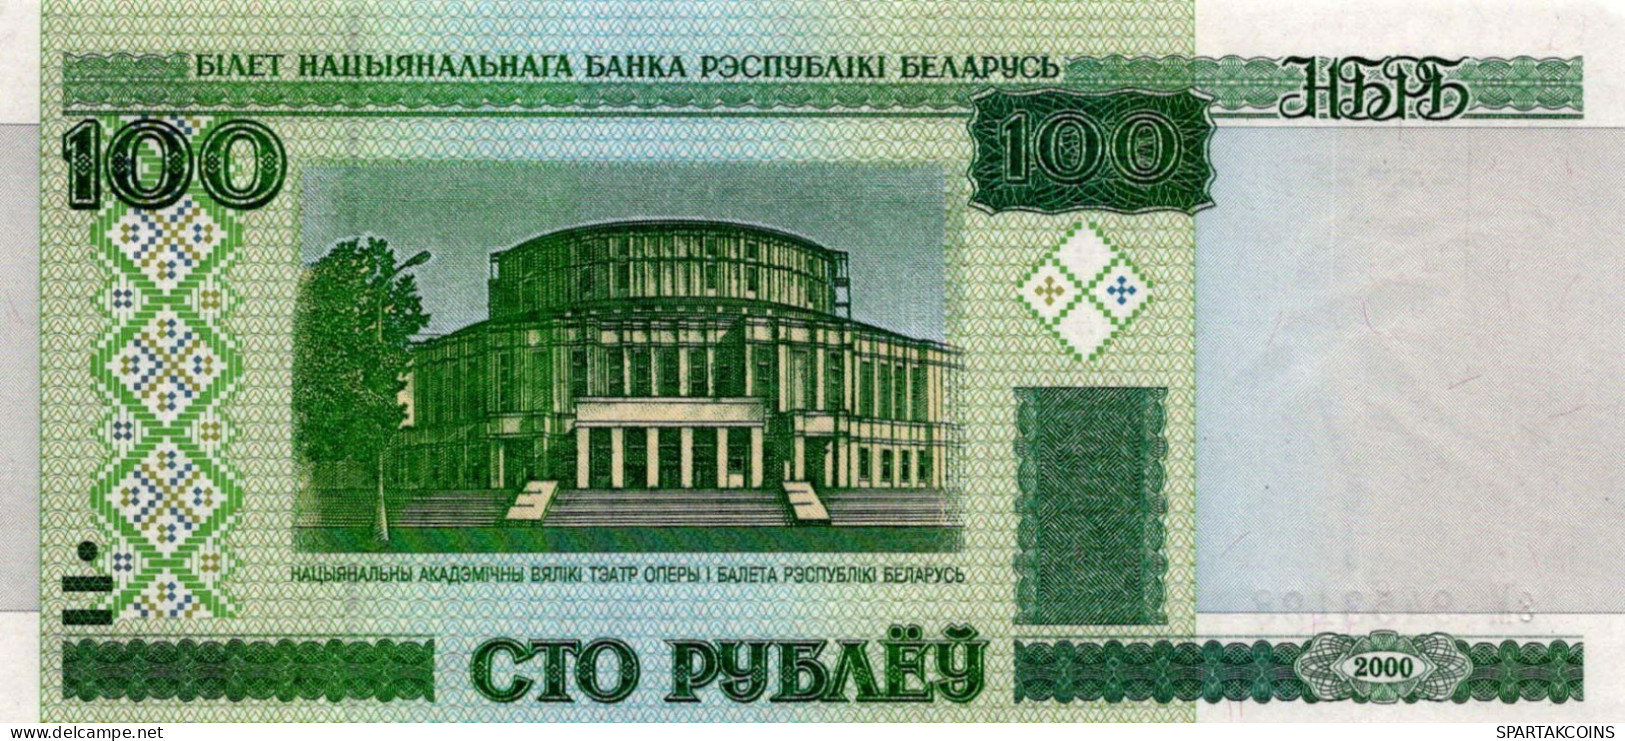 100 RUBLES 2000 BELARUS Papiergeld Banknote #PJ305 - [11] Emissioni Locali